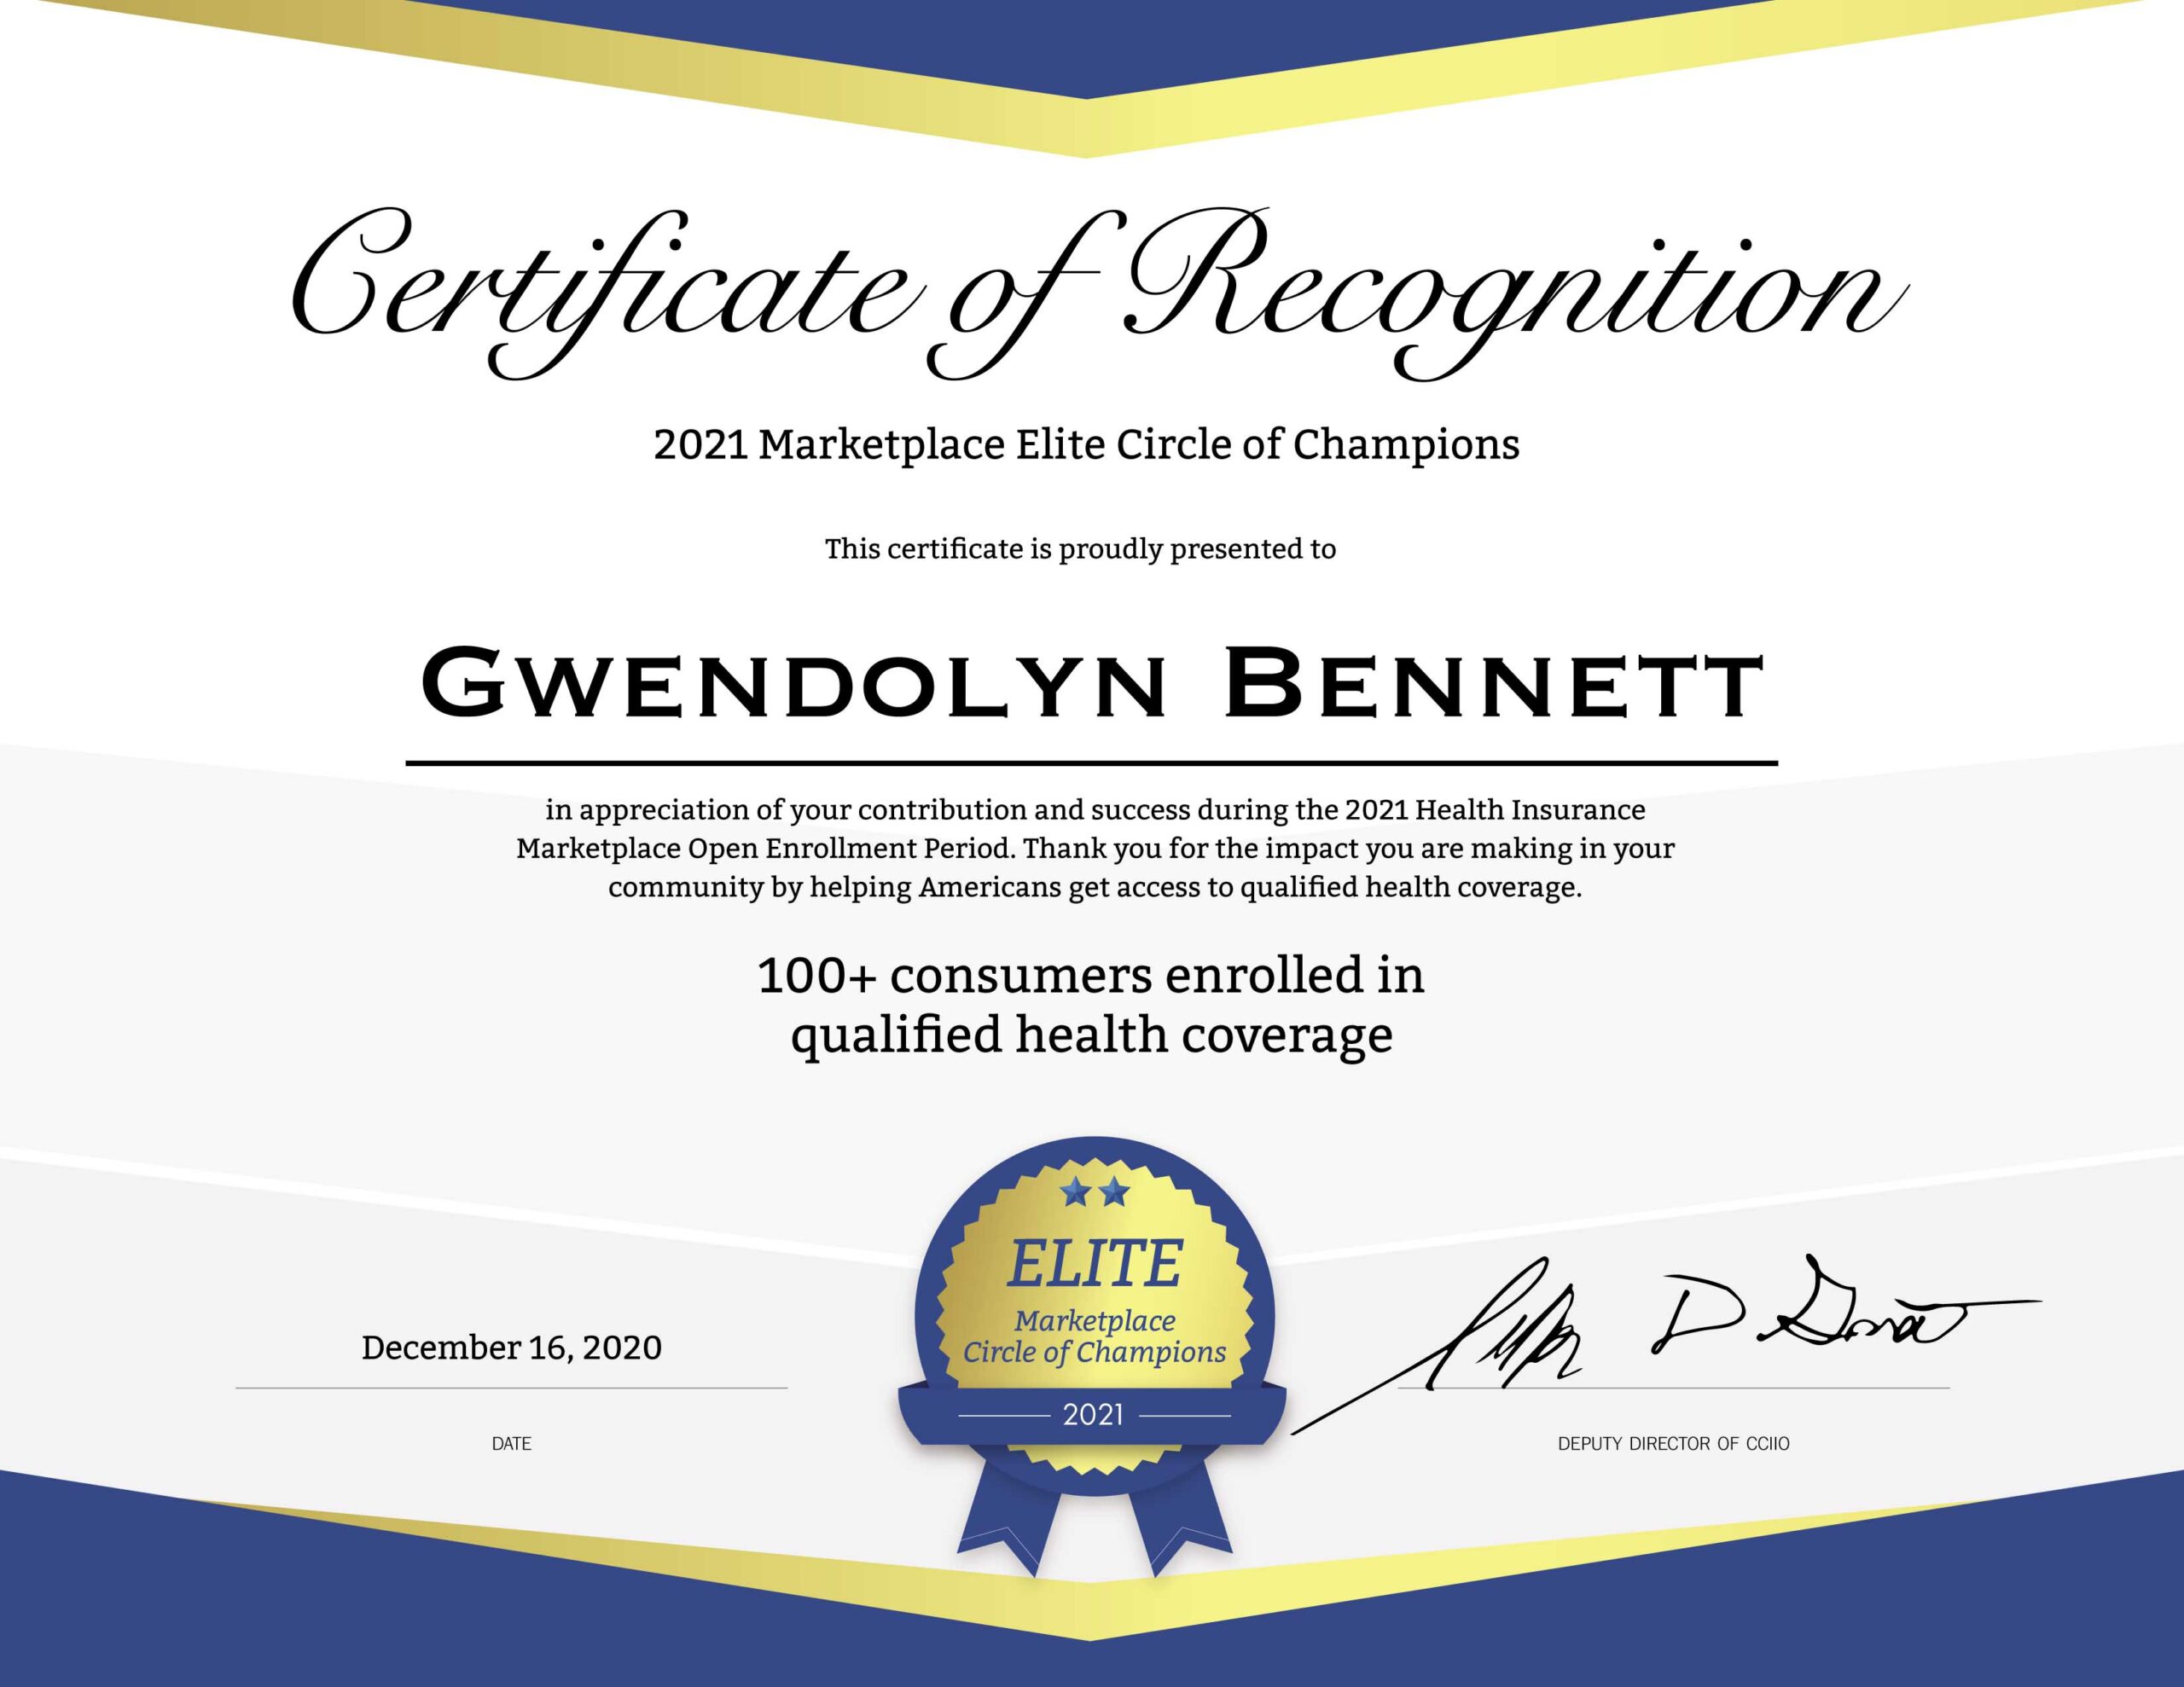 Certificate for Gwendolyn Bennett